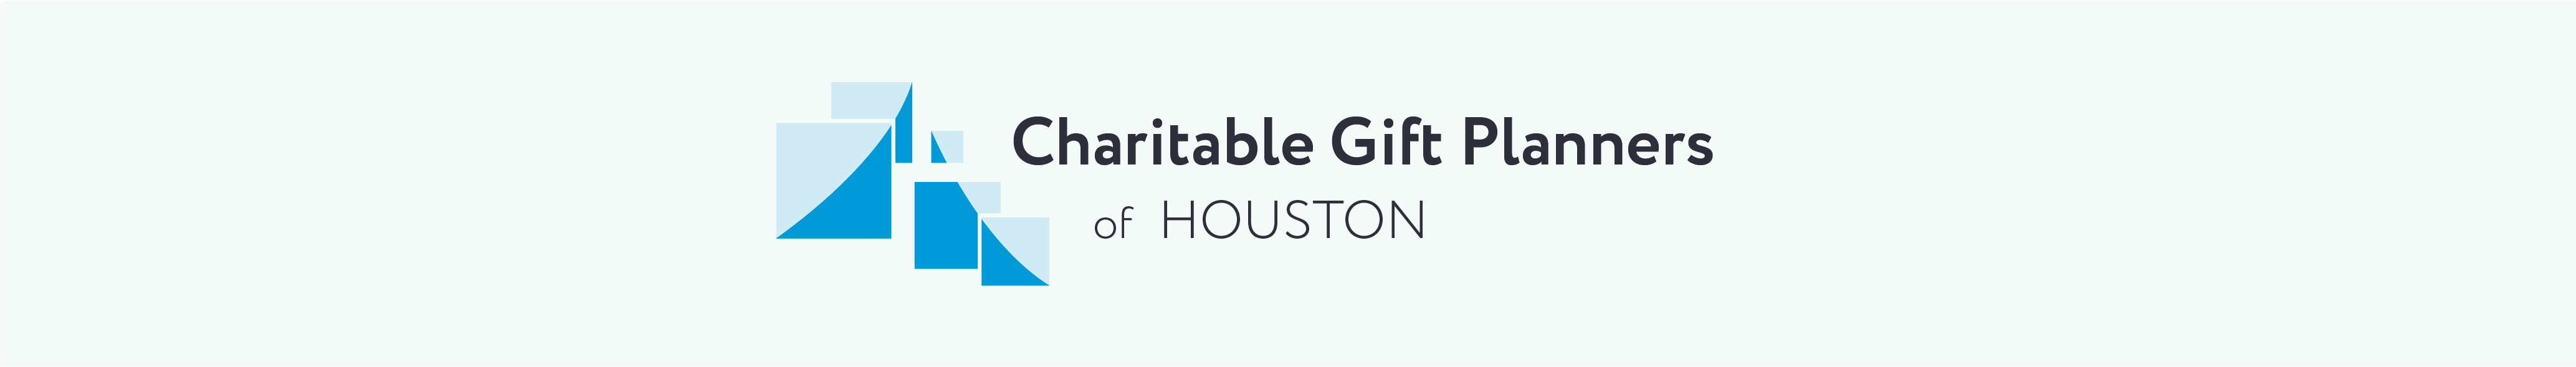 Charitable Gift Planners of Houston Logo